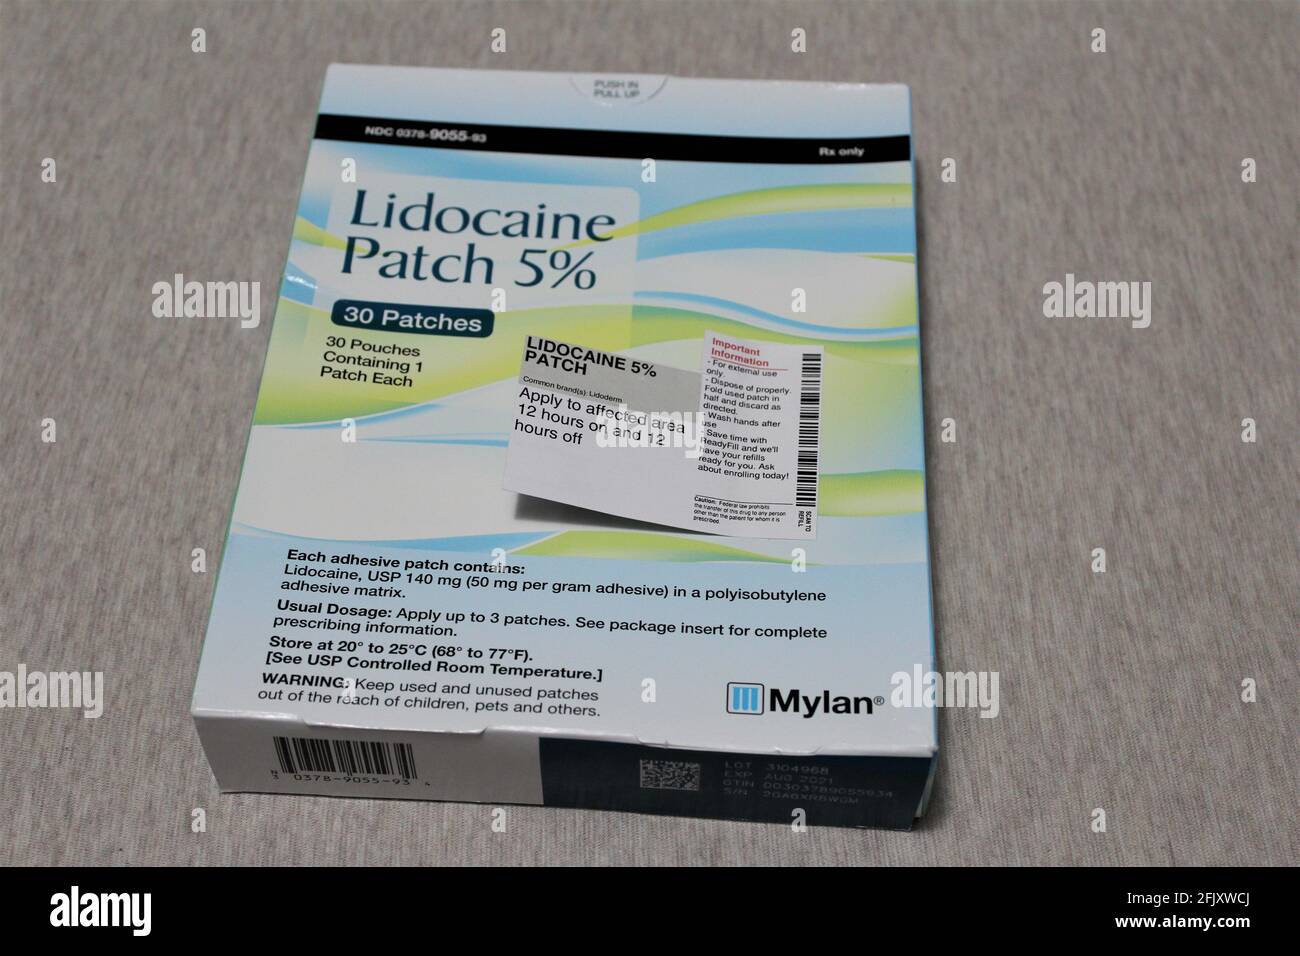 Parche de lidocaína fotografías e imágenes de alta resolución - Alamy